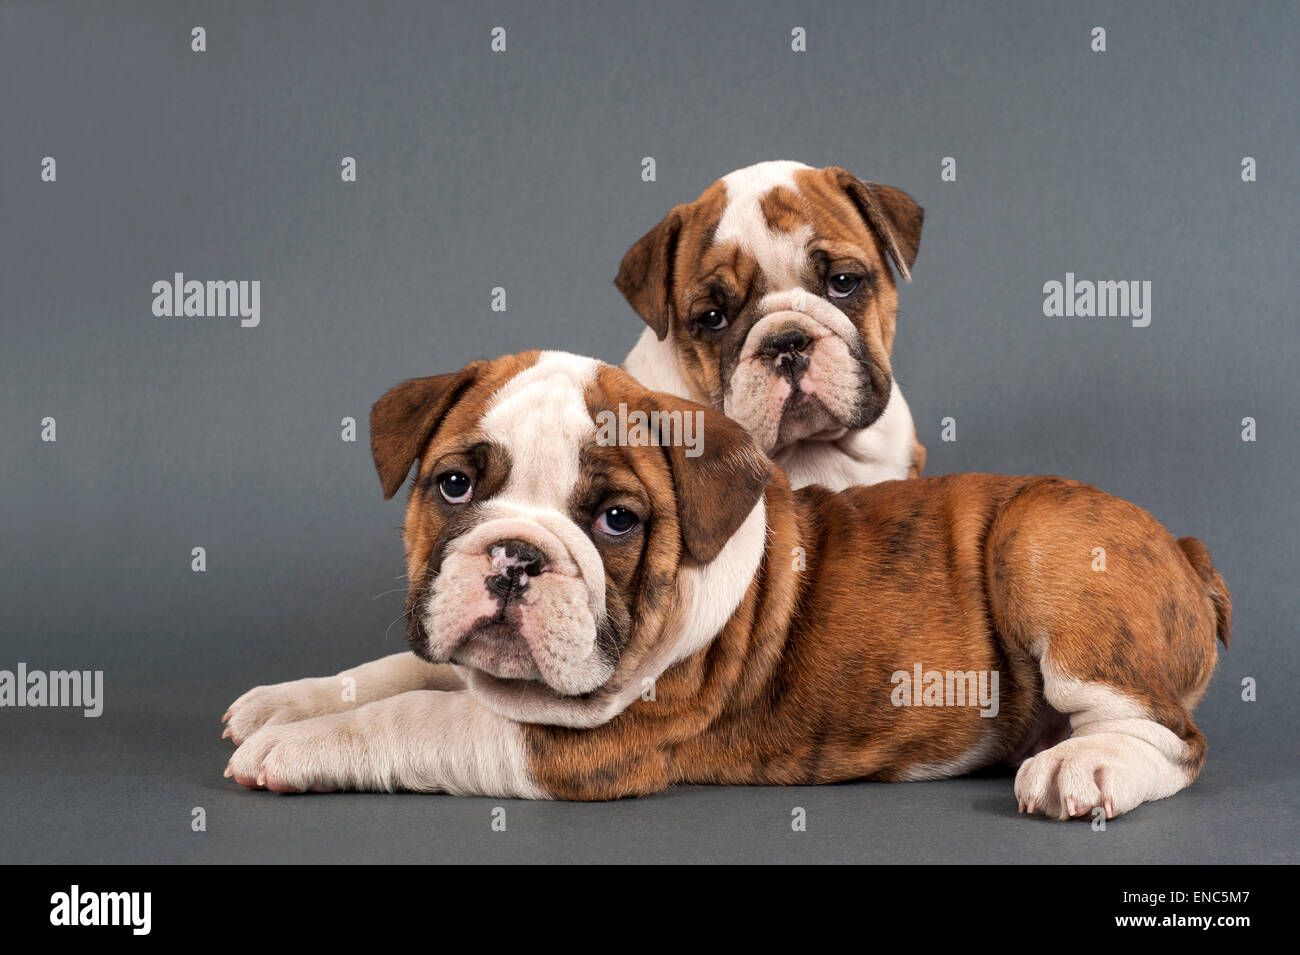 Two  English  bulldog puppies on gray background. Stock Photo